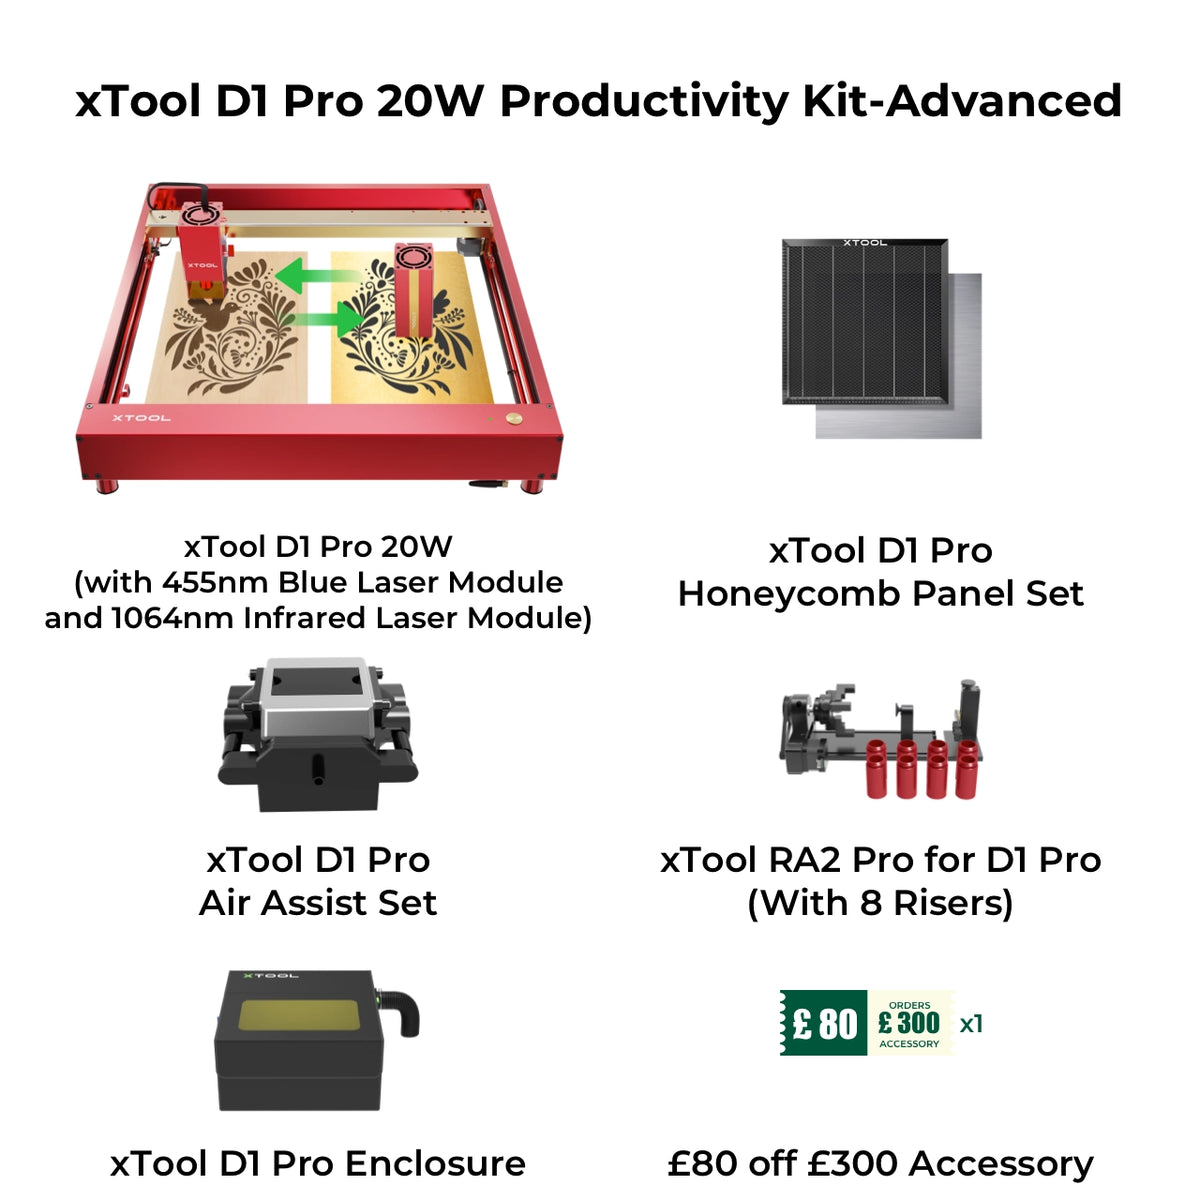 xTool D1 Pro 20W Productivity Kit-Advanced